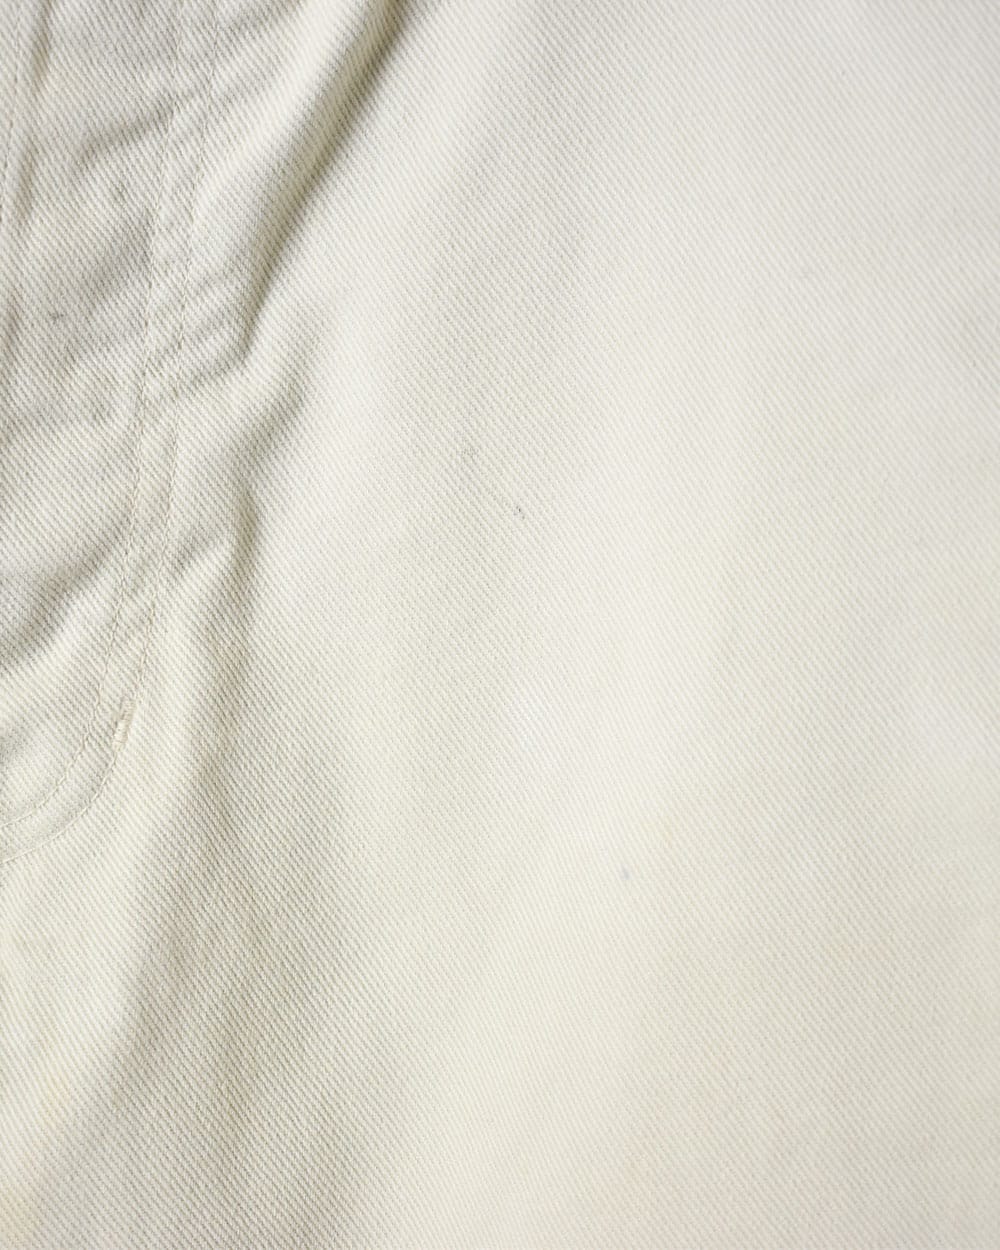 White Levi's 501 Jeans - W36 L29